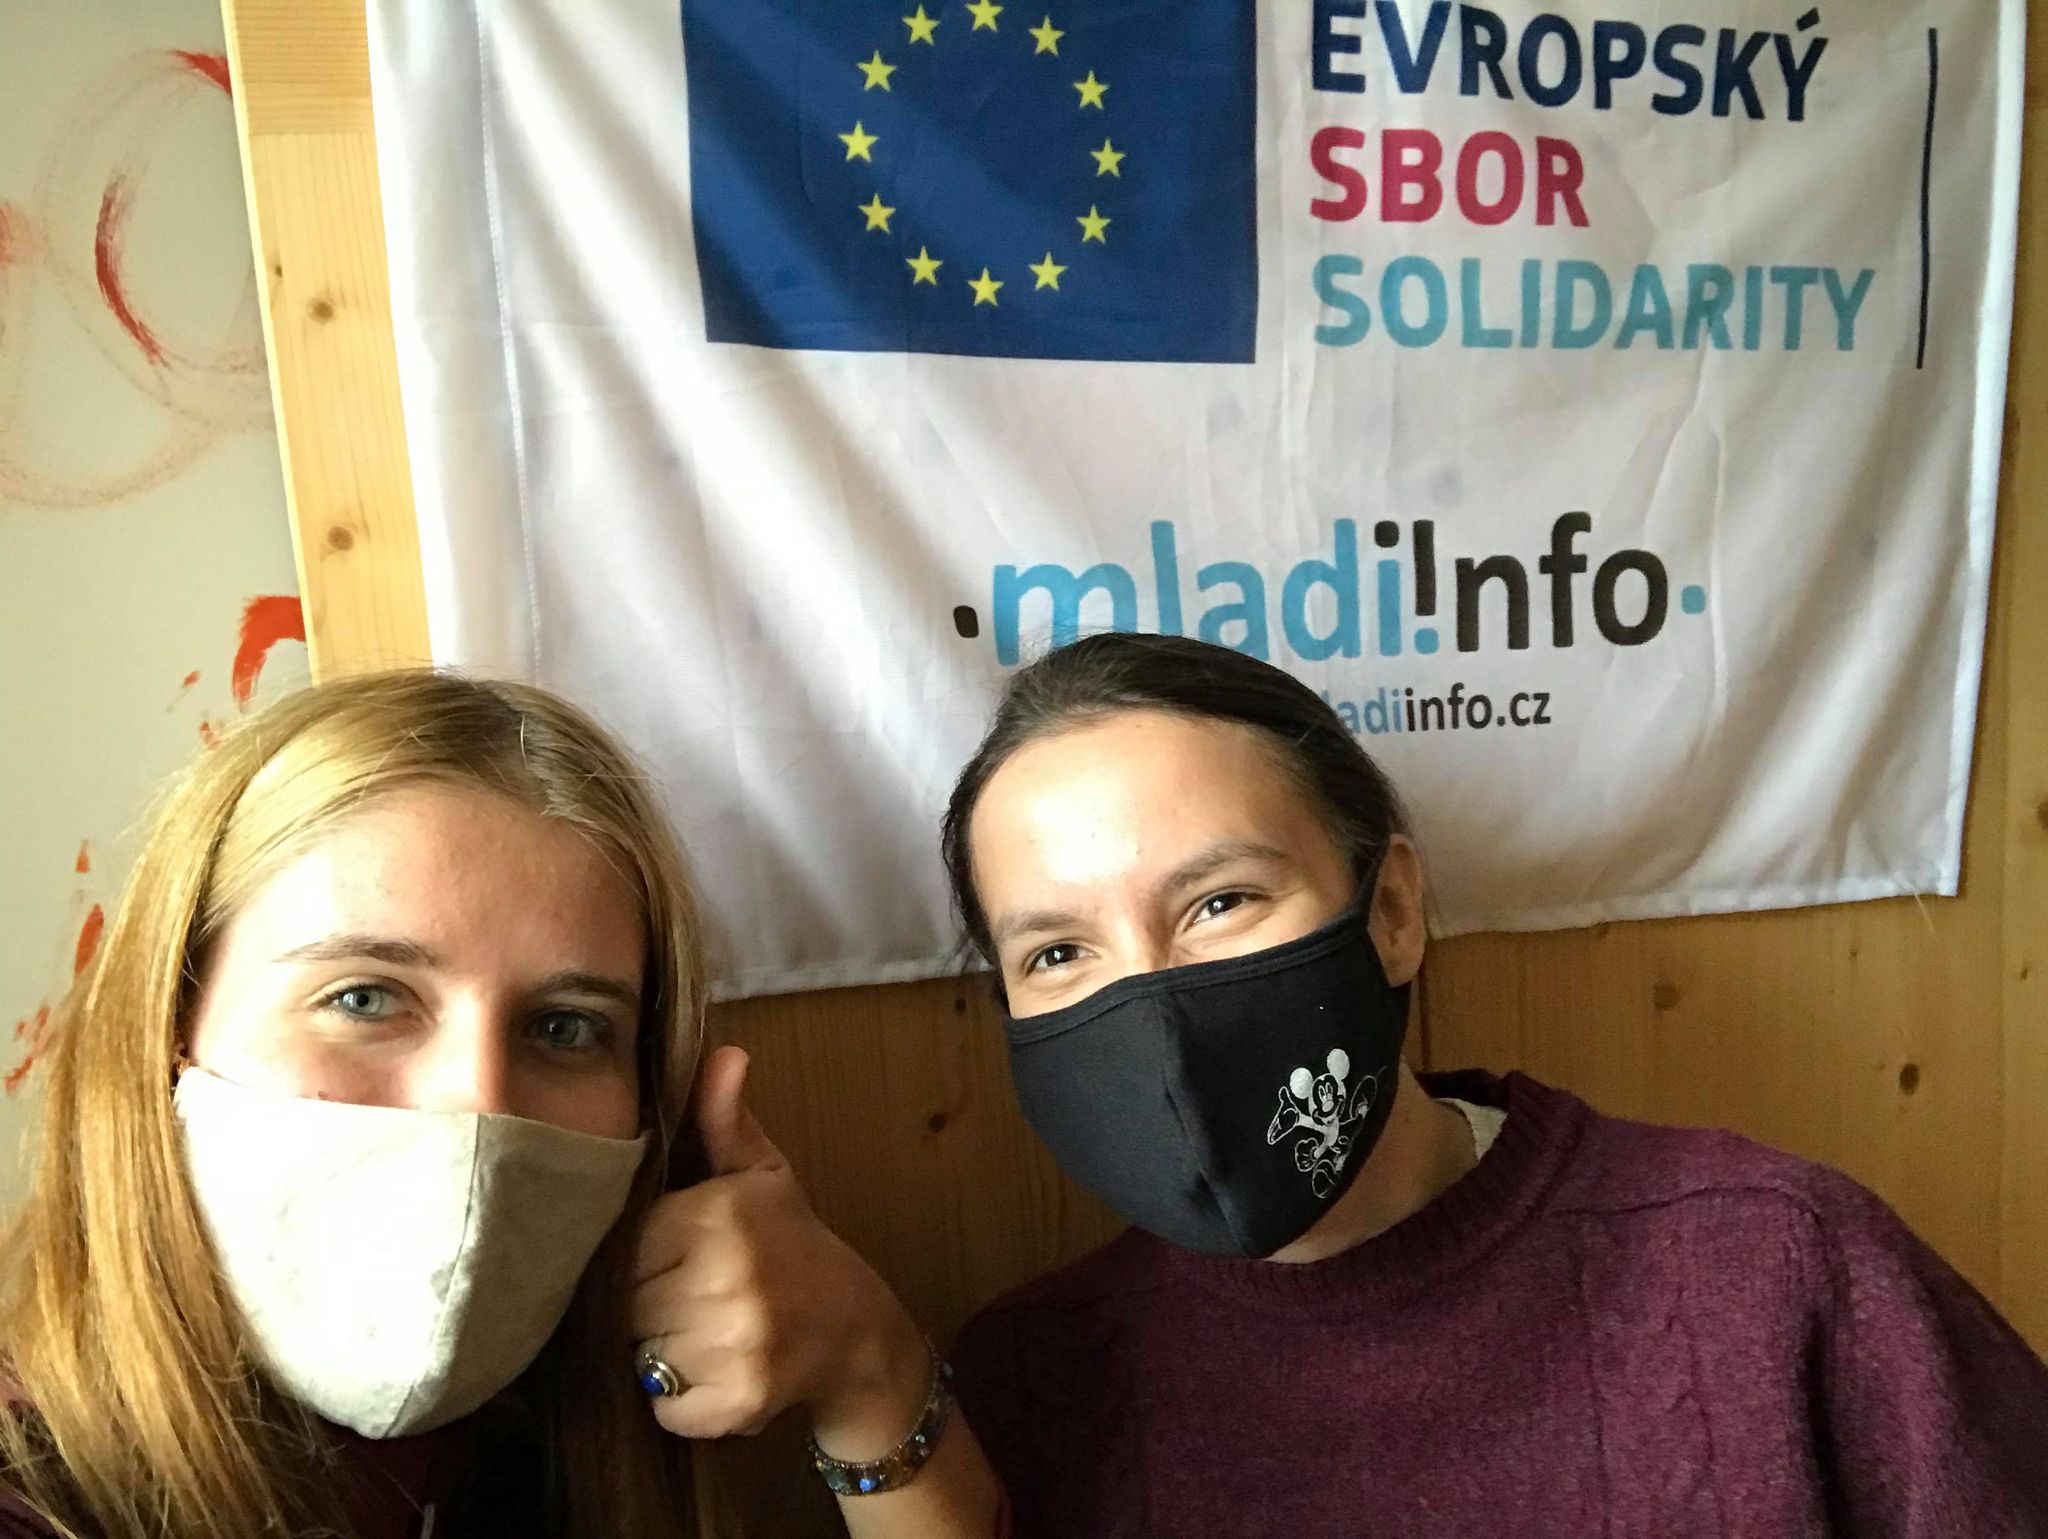 Volunteer in Brno-Mladiinfo ČR